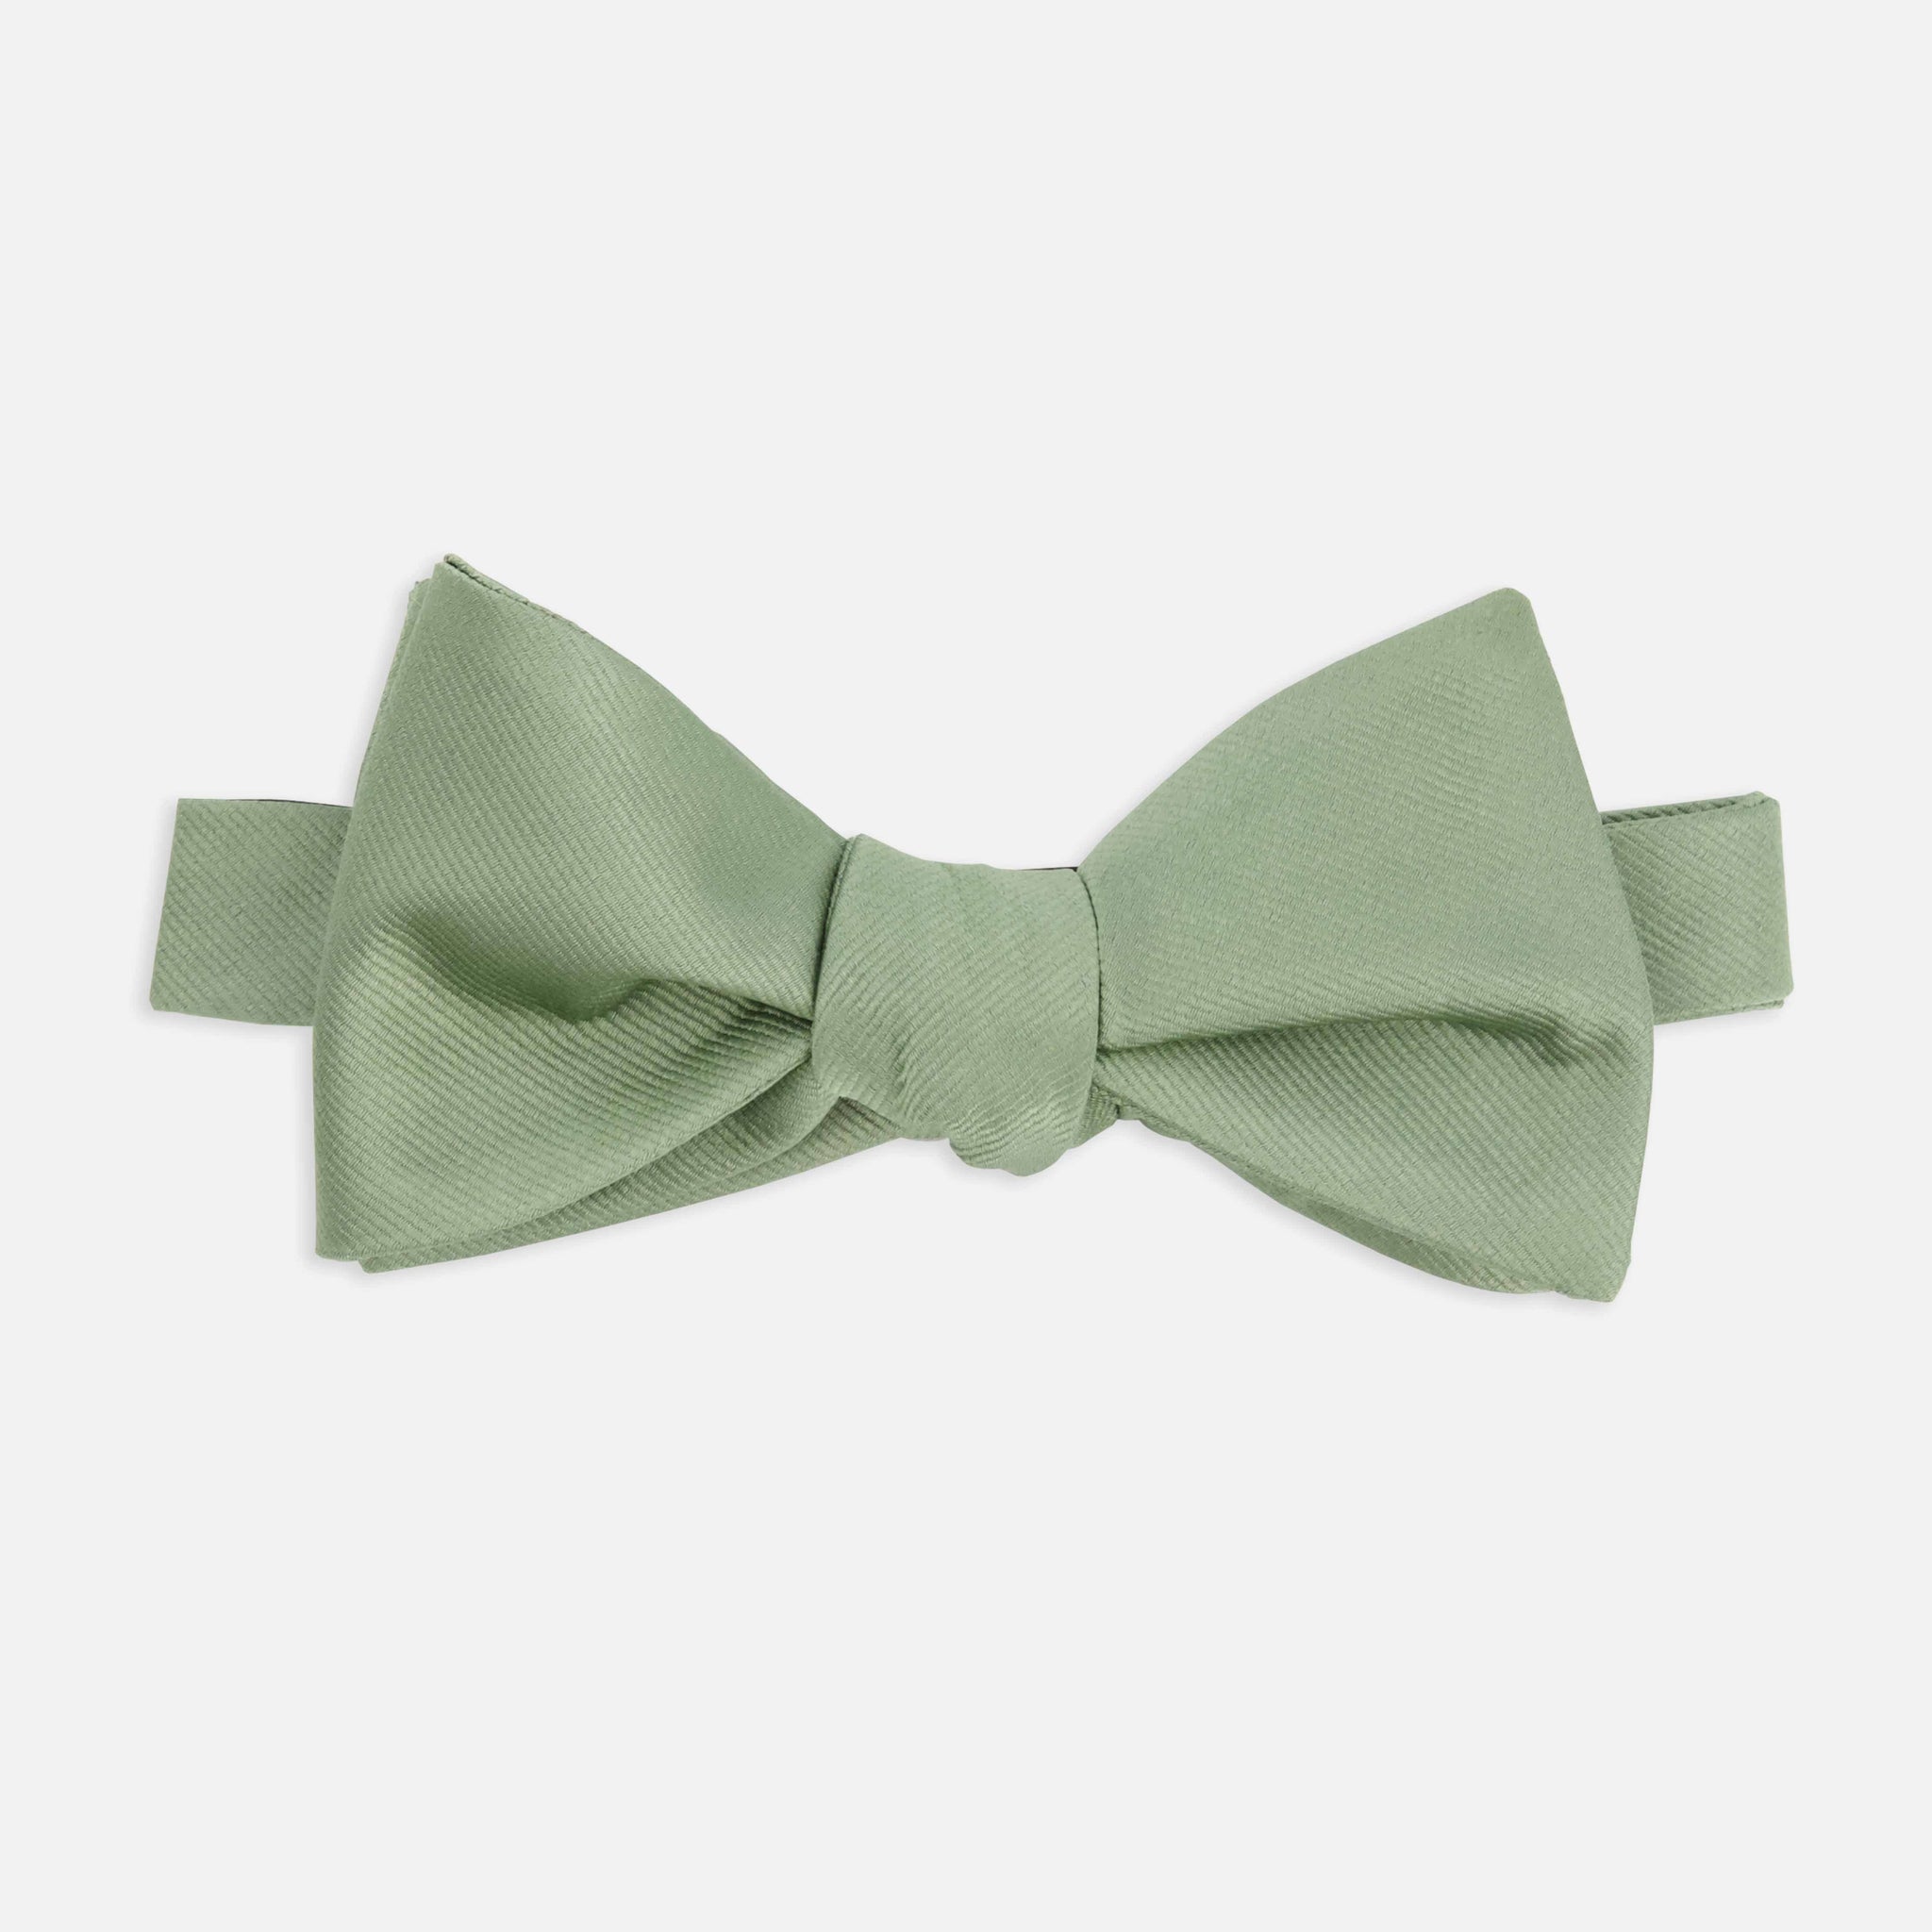 Grosgrain Solid Sage Green Bow Tie by Tie Bar